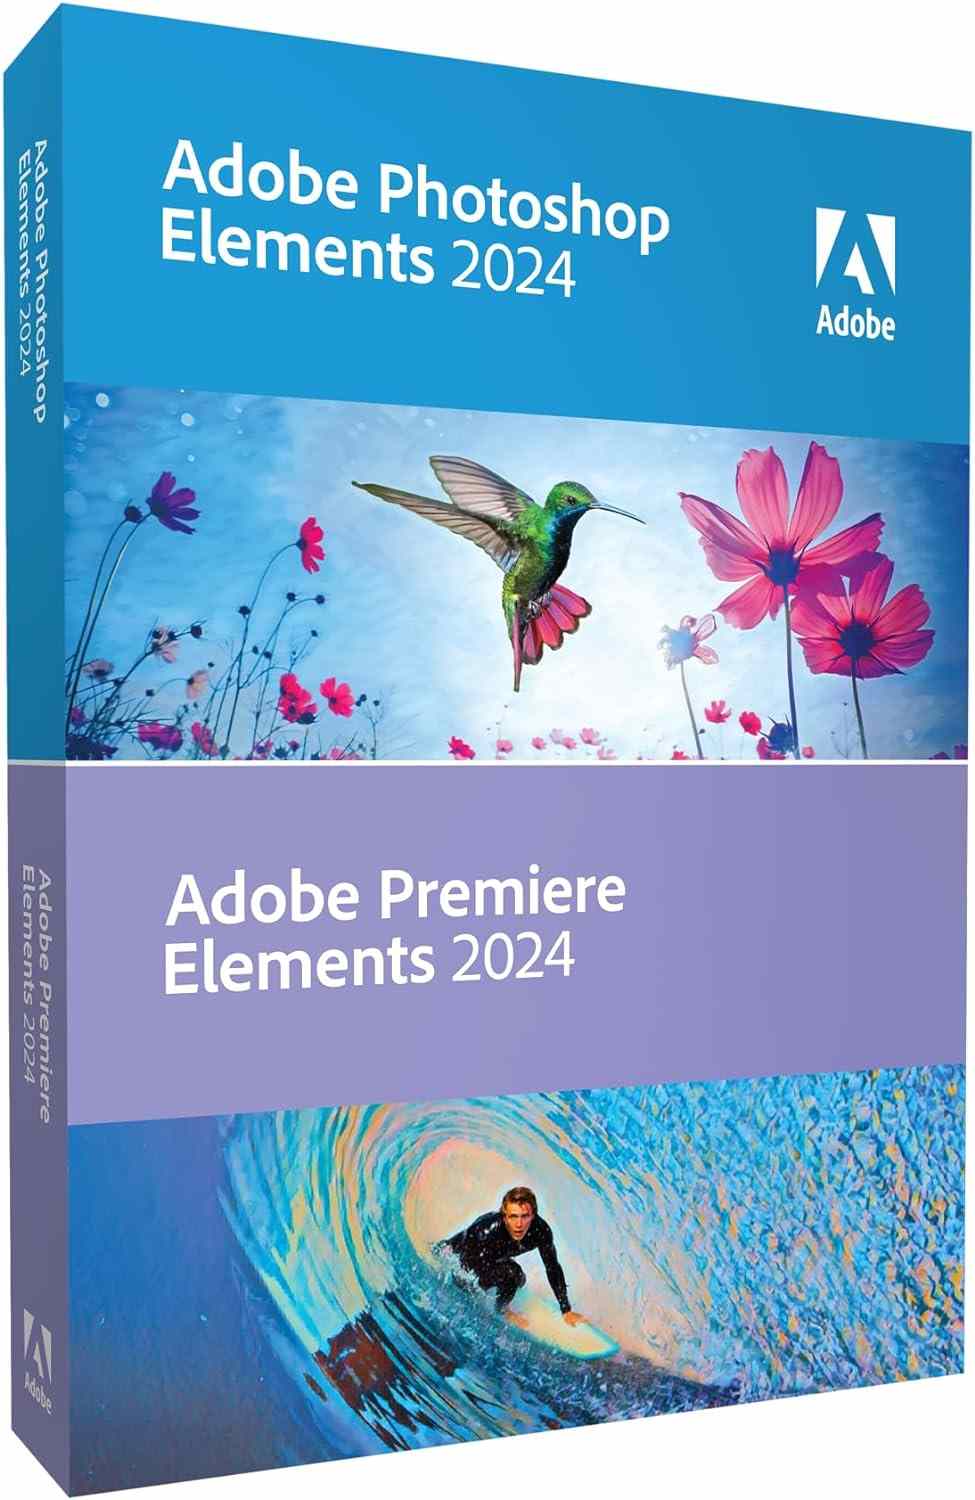 Adobe Photoshop & Adobe Premiere Elements 2024 MP CZ FULL BOX0 